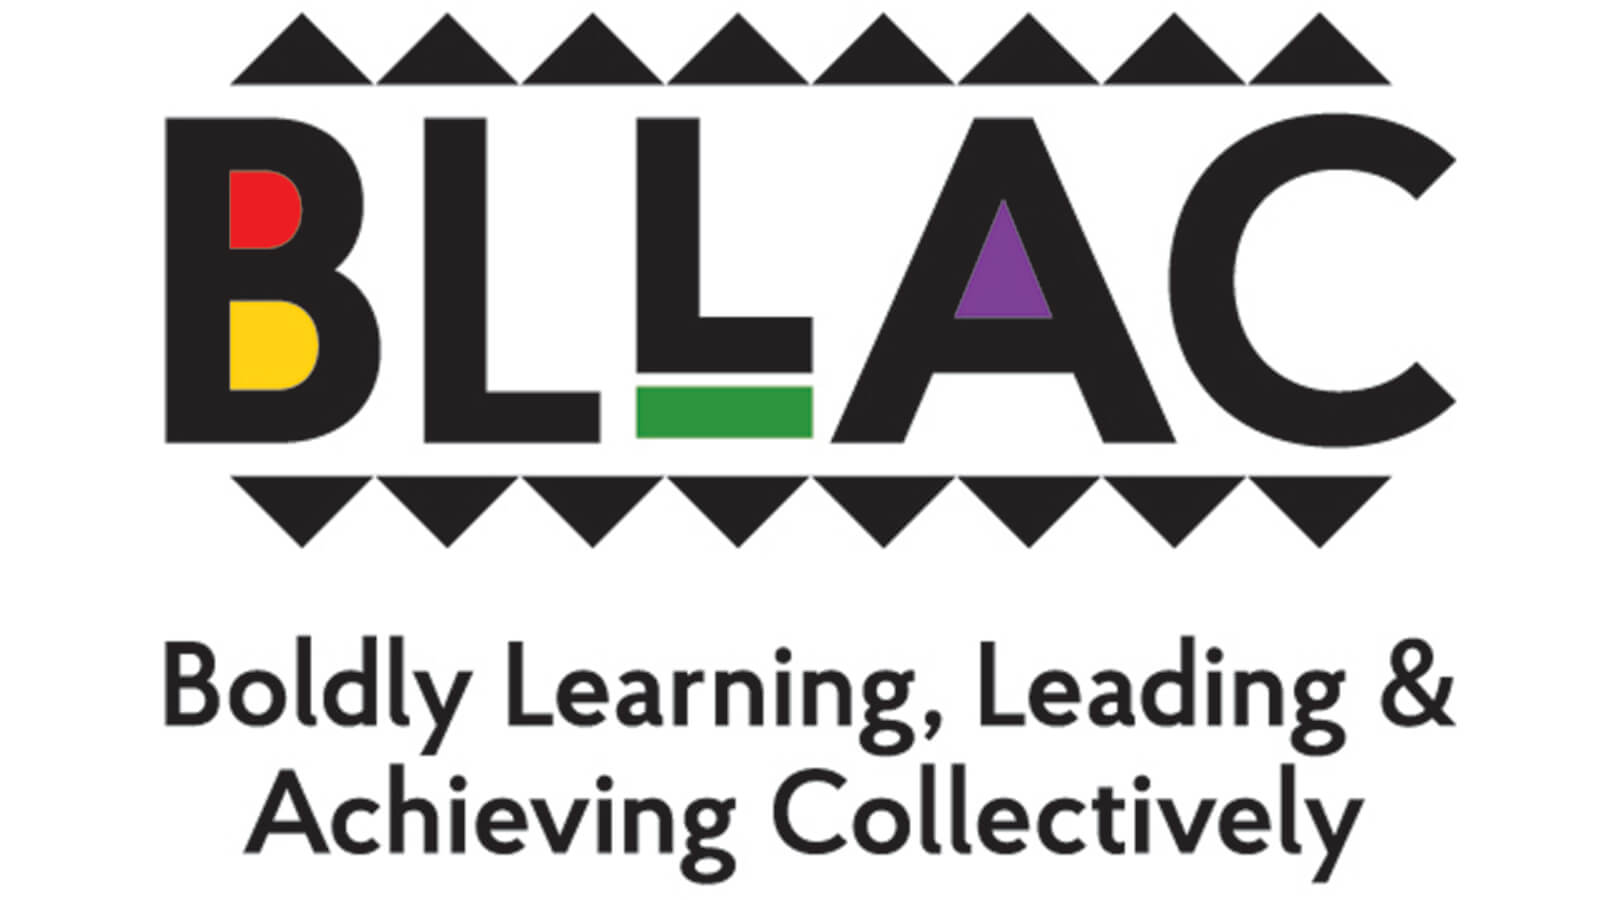 BLLAC BRG logo